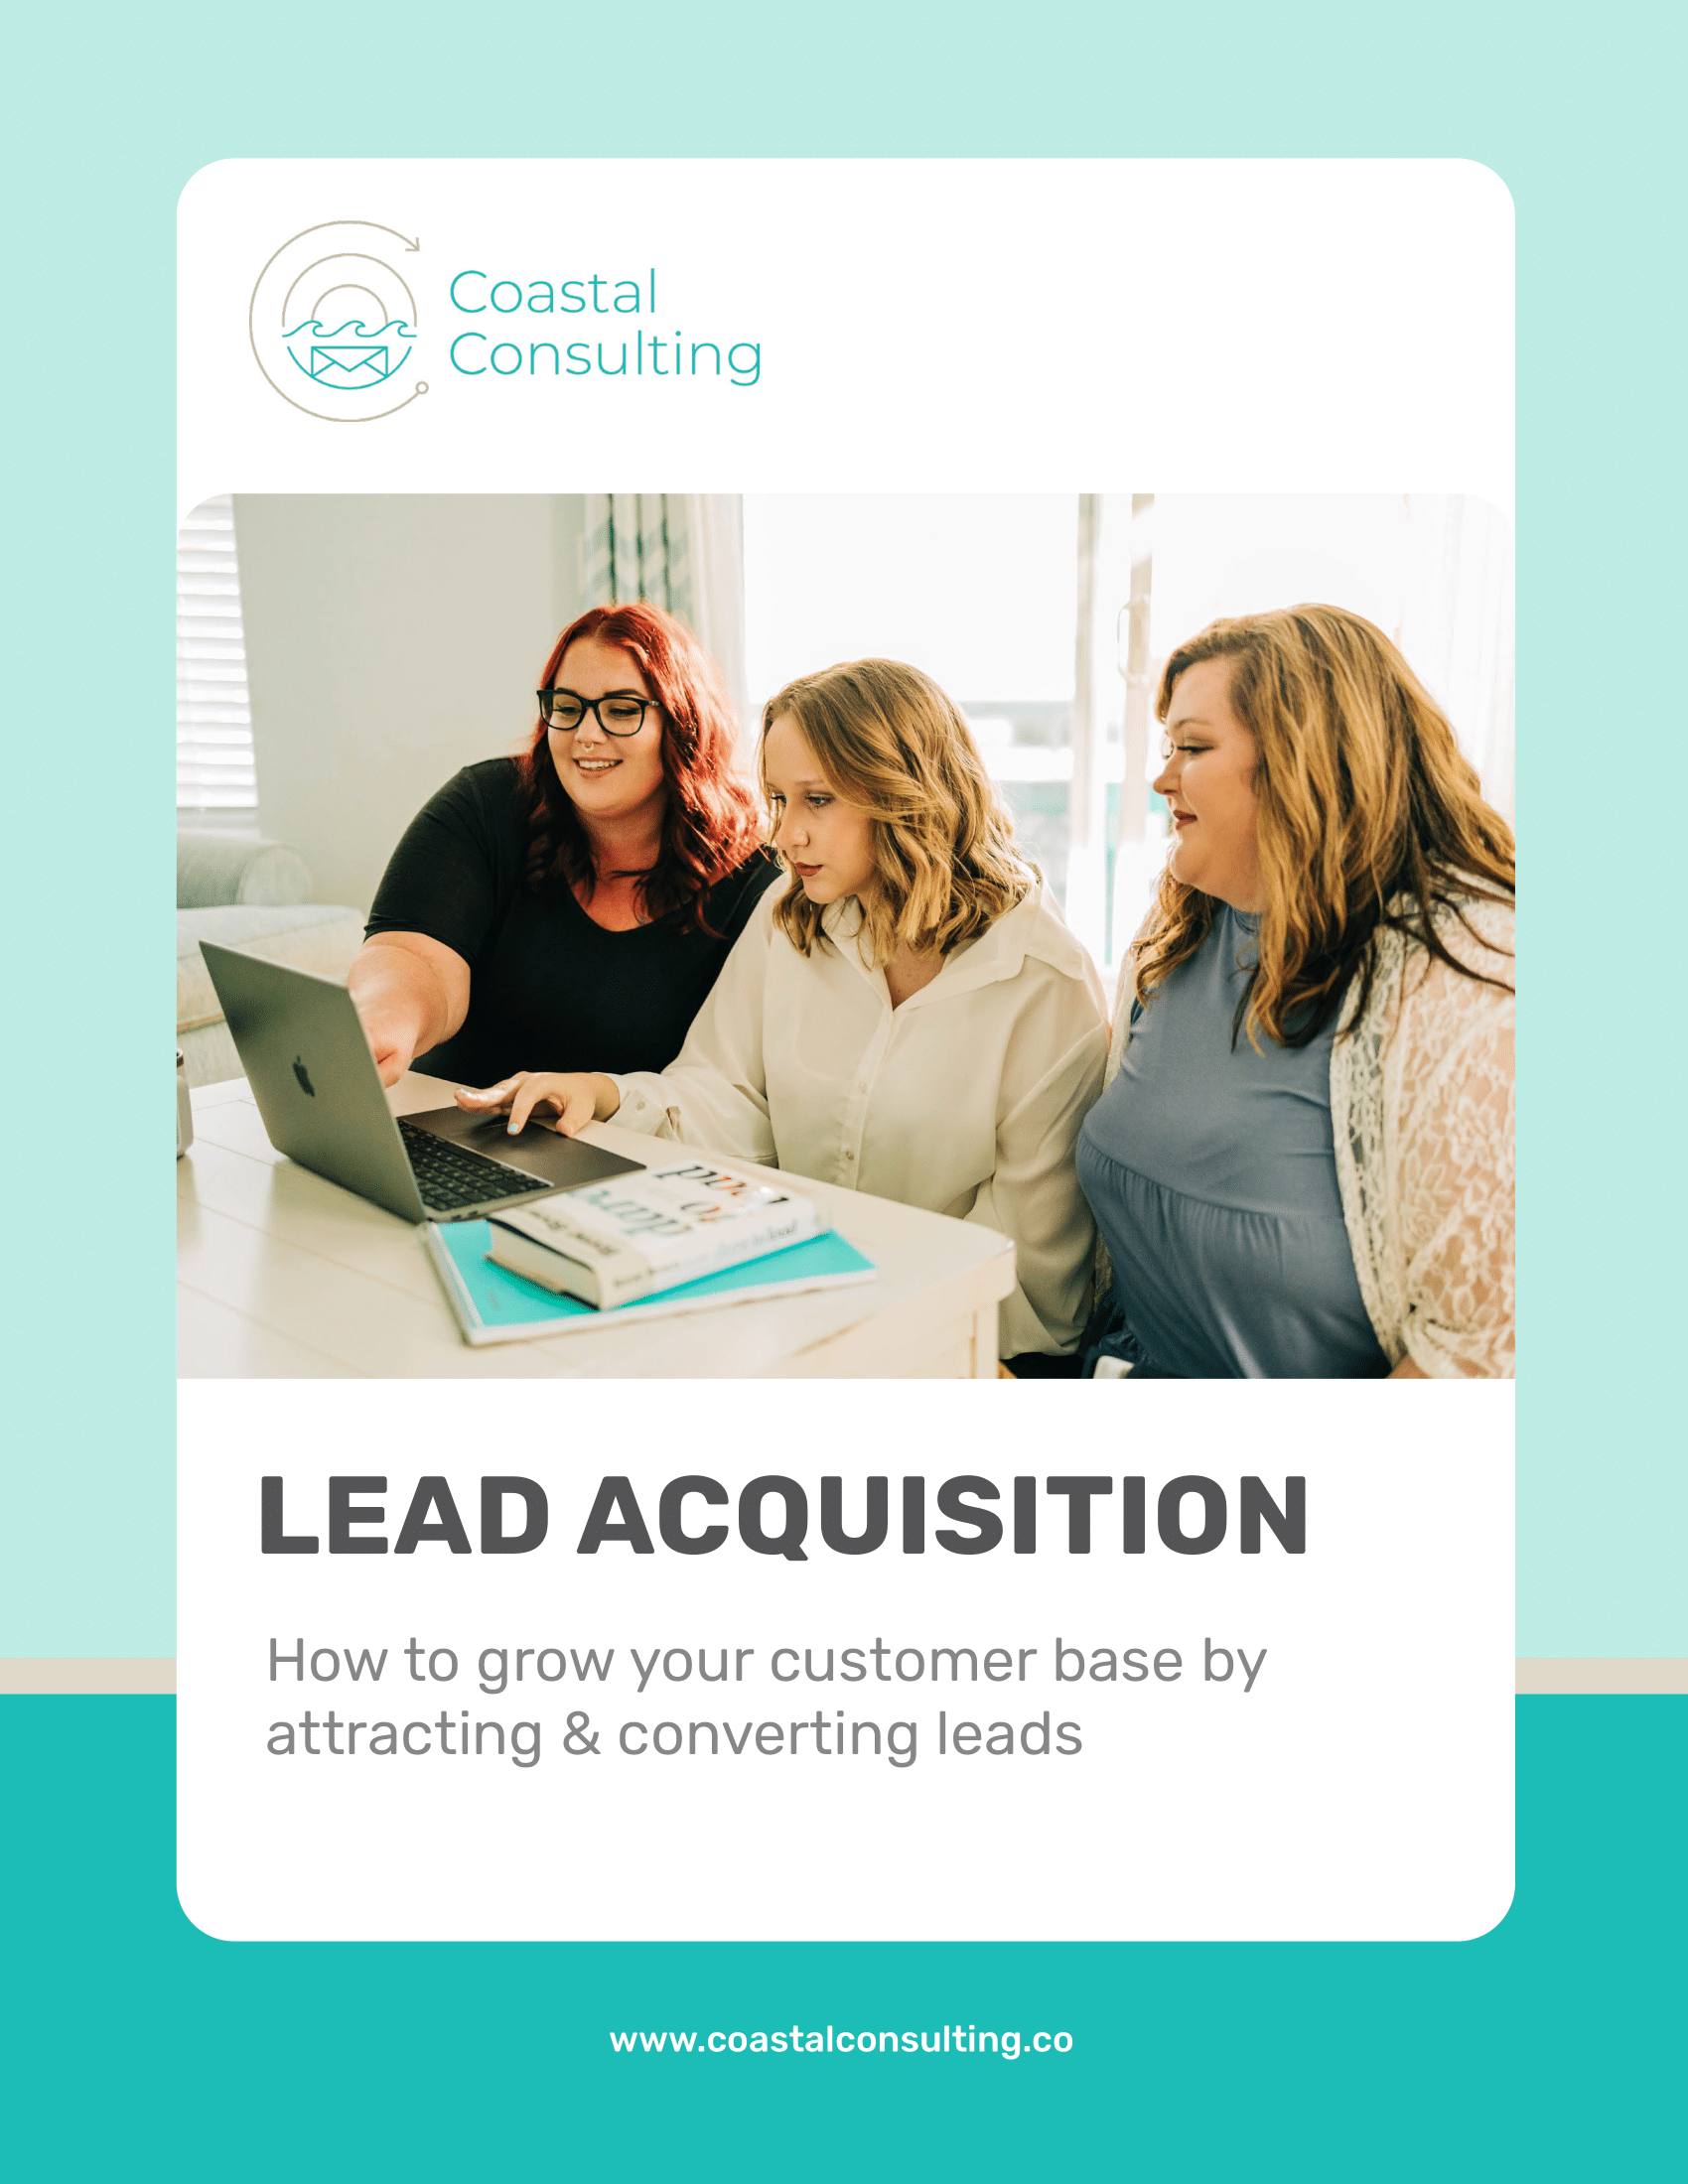 Build a Lead Acquisition Strategy